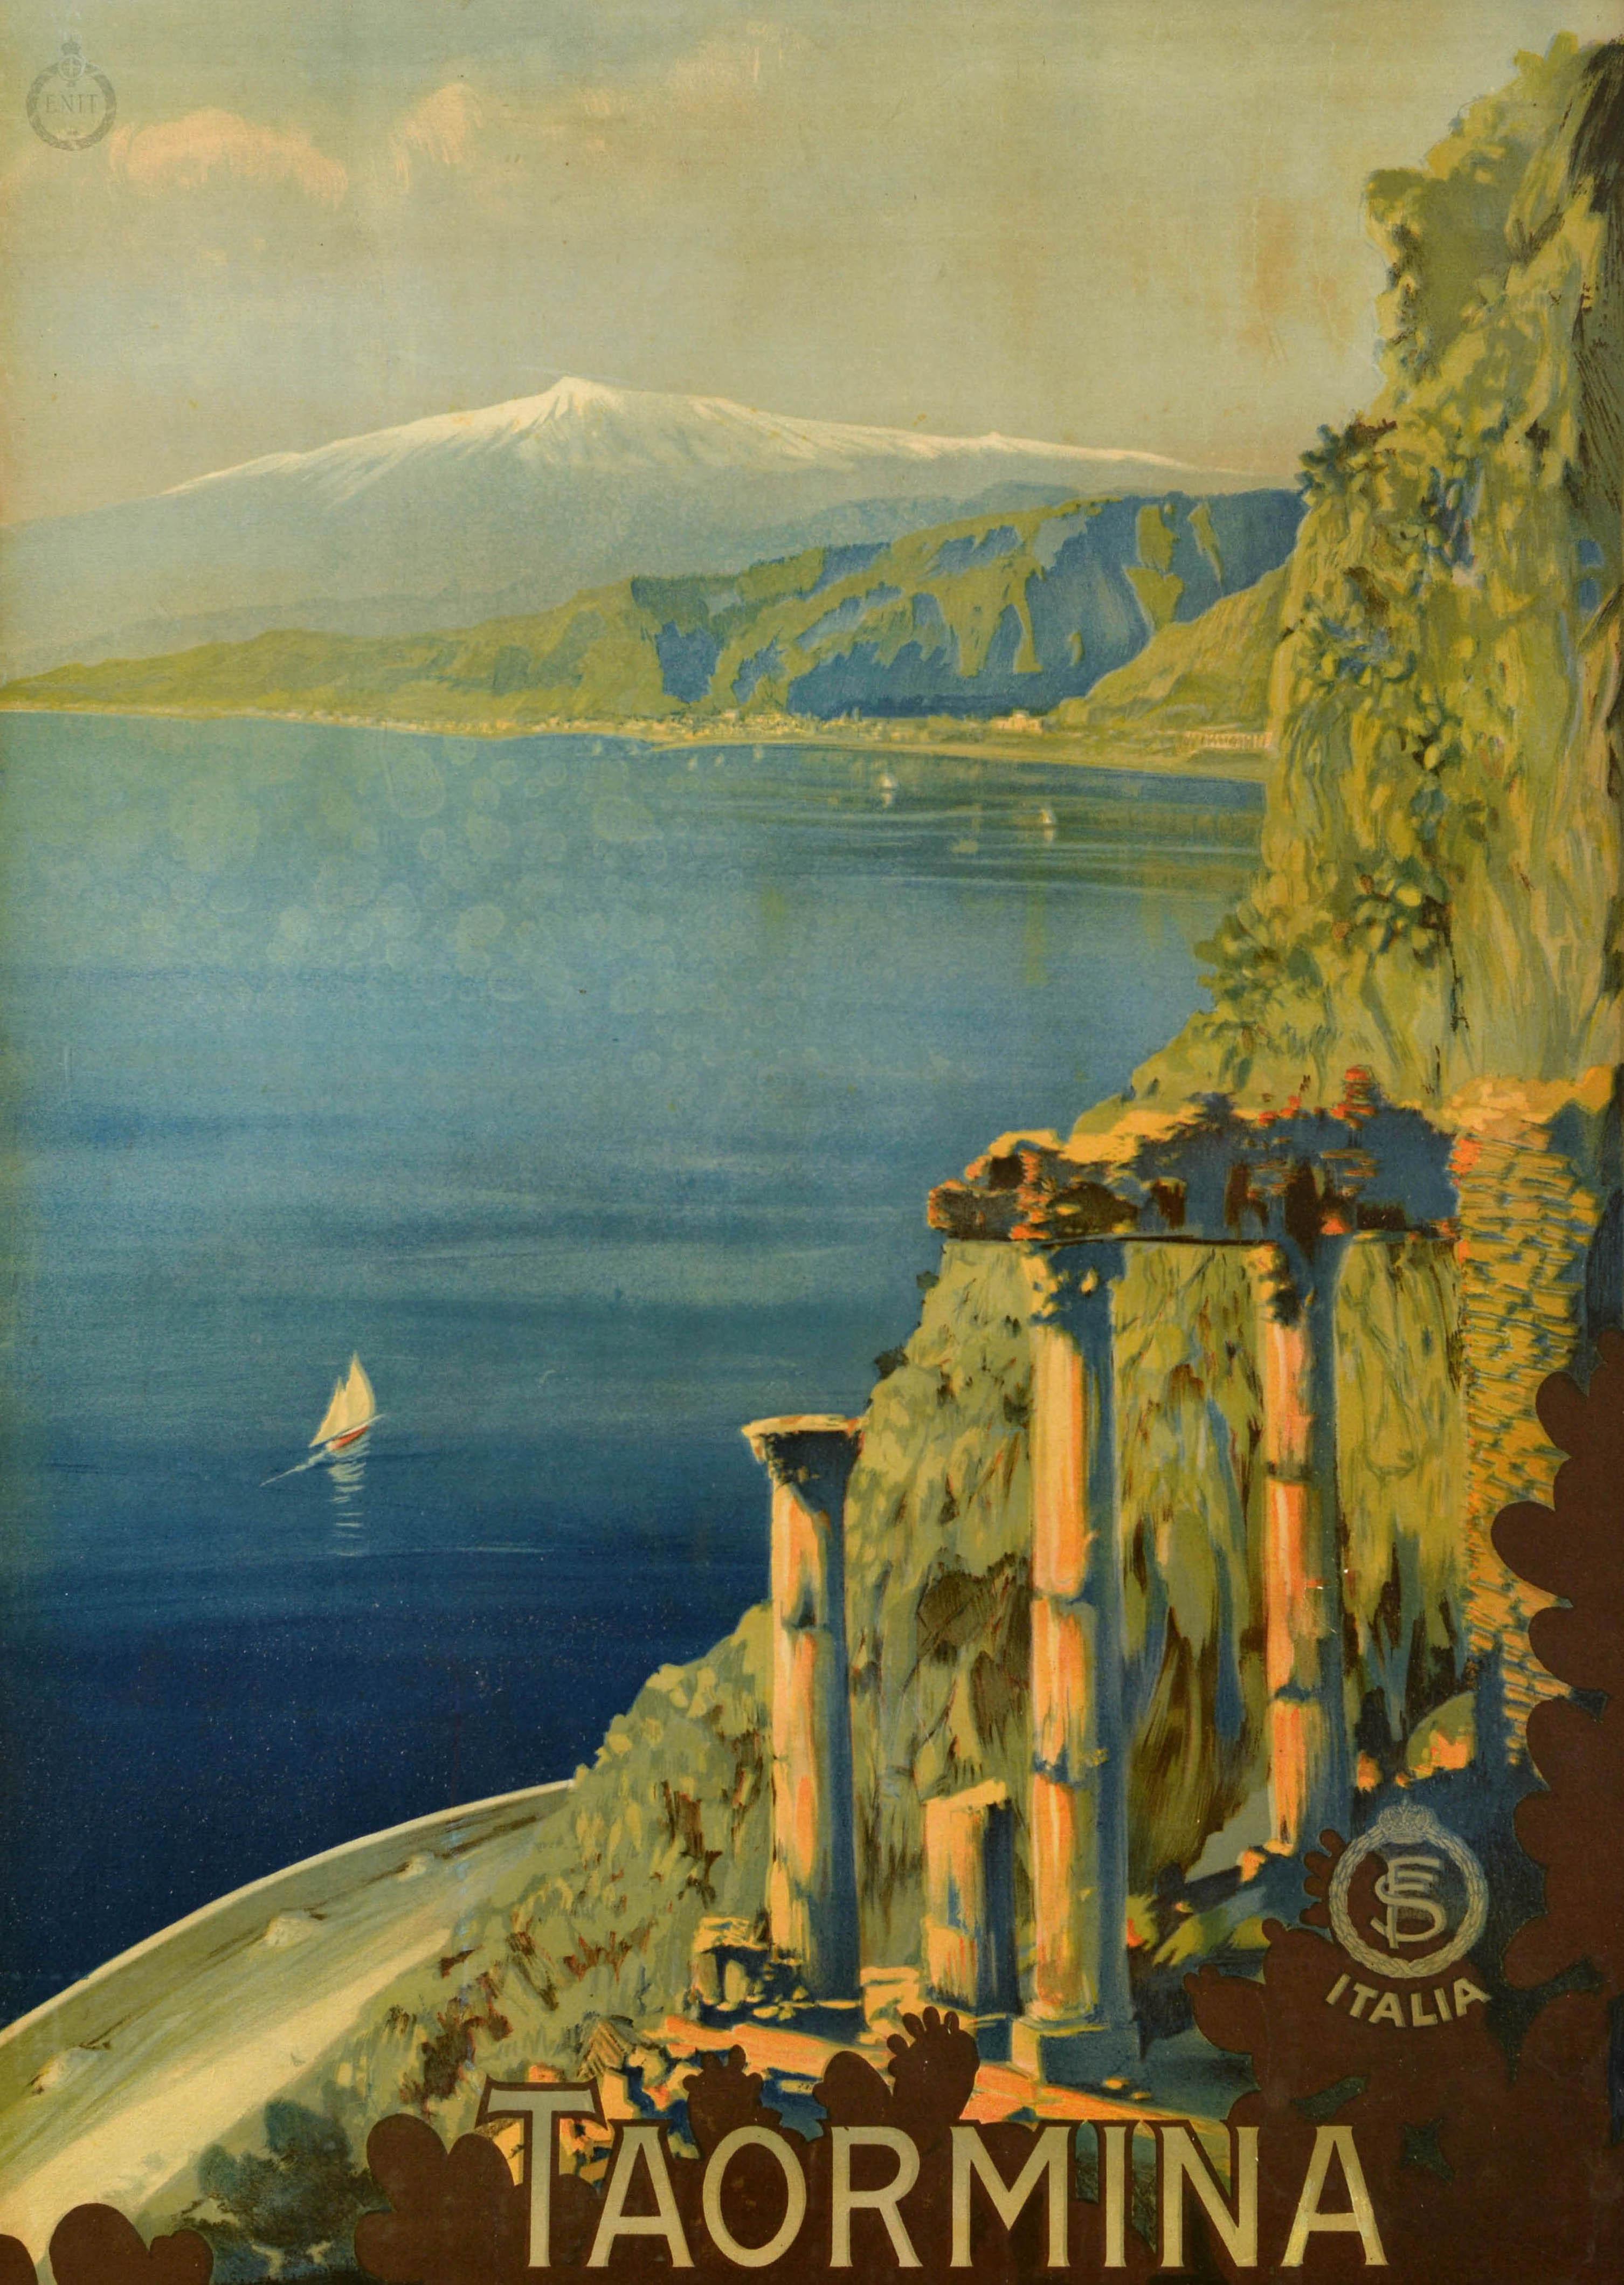 Original Vintage Travel Poster Taormina Sicily ENIT Italy Mt Etna Mario Borgoni For Sale 1